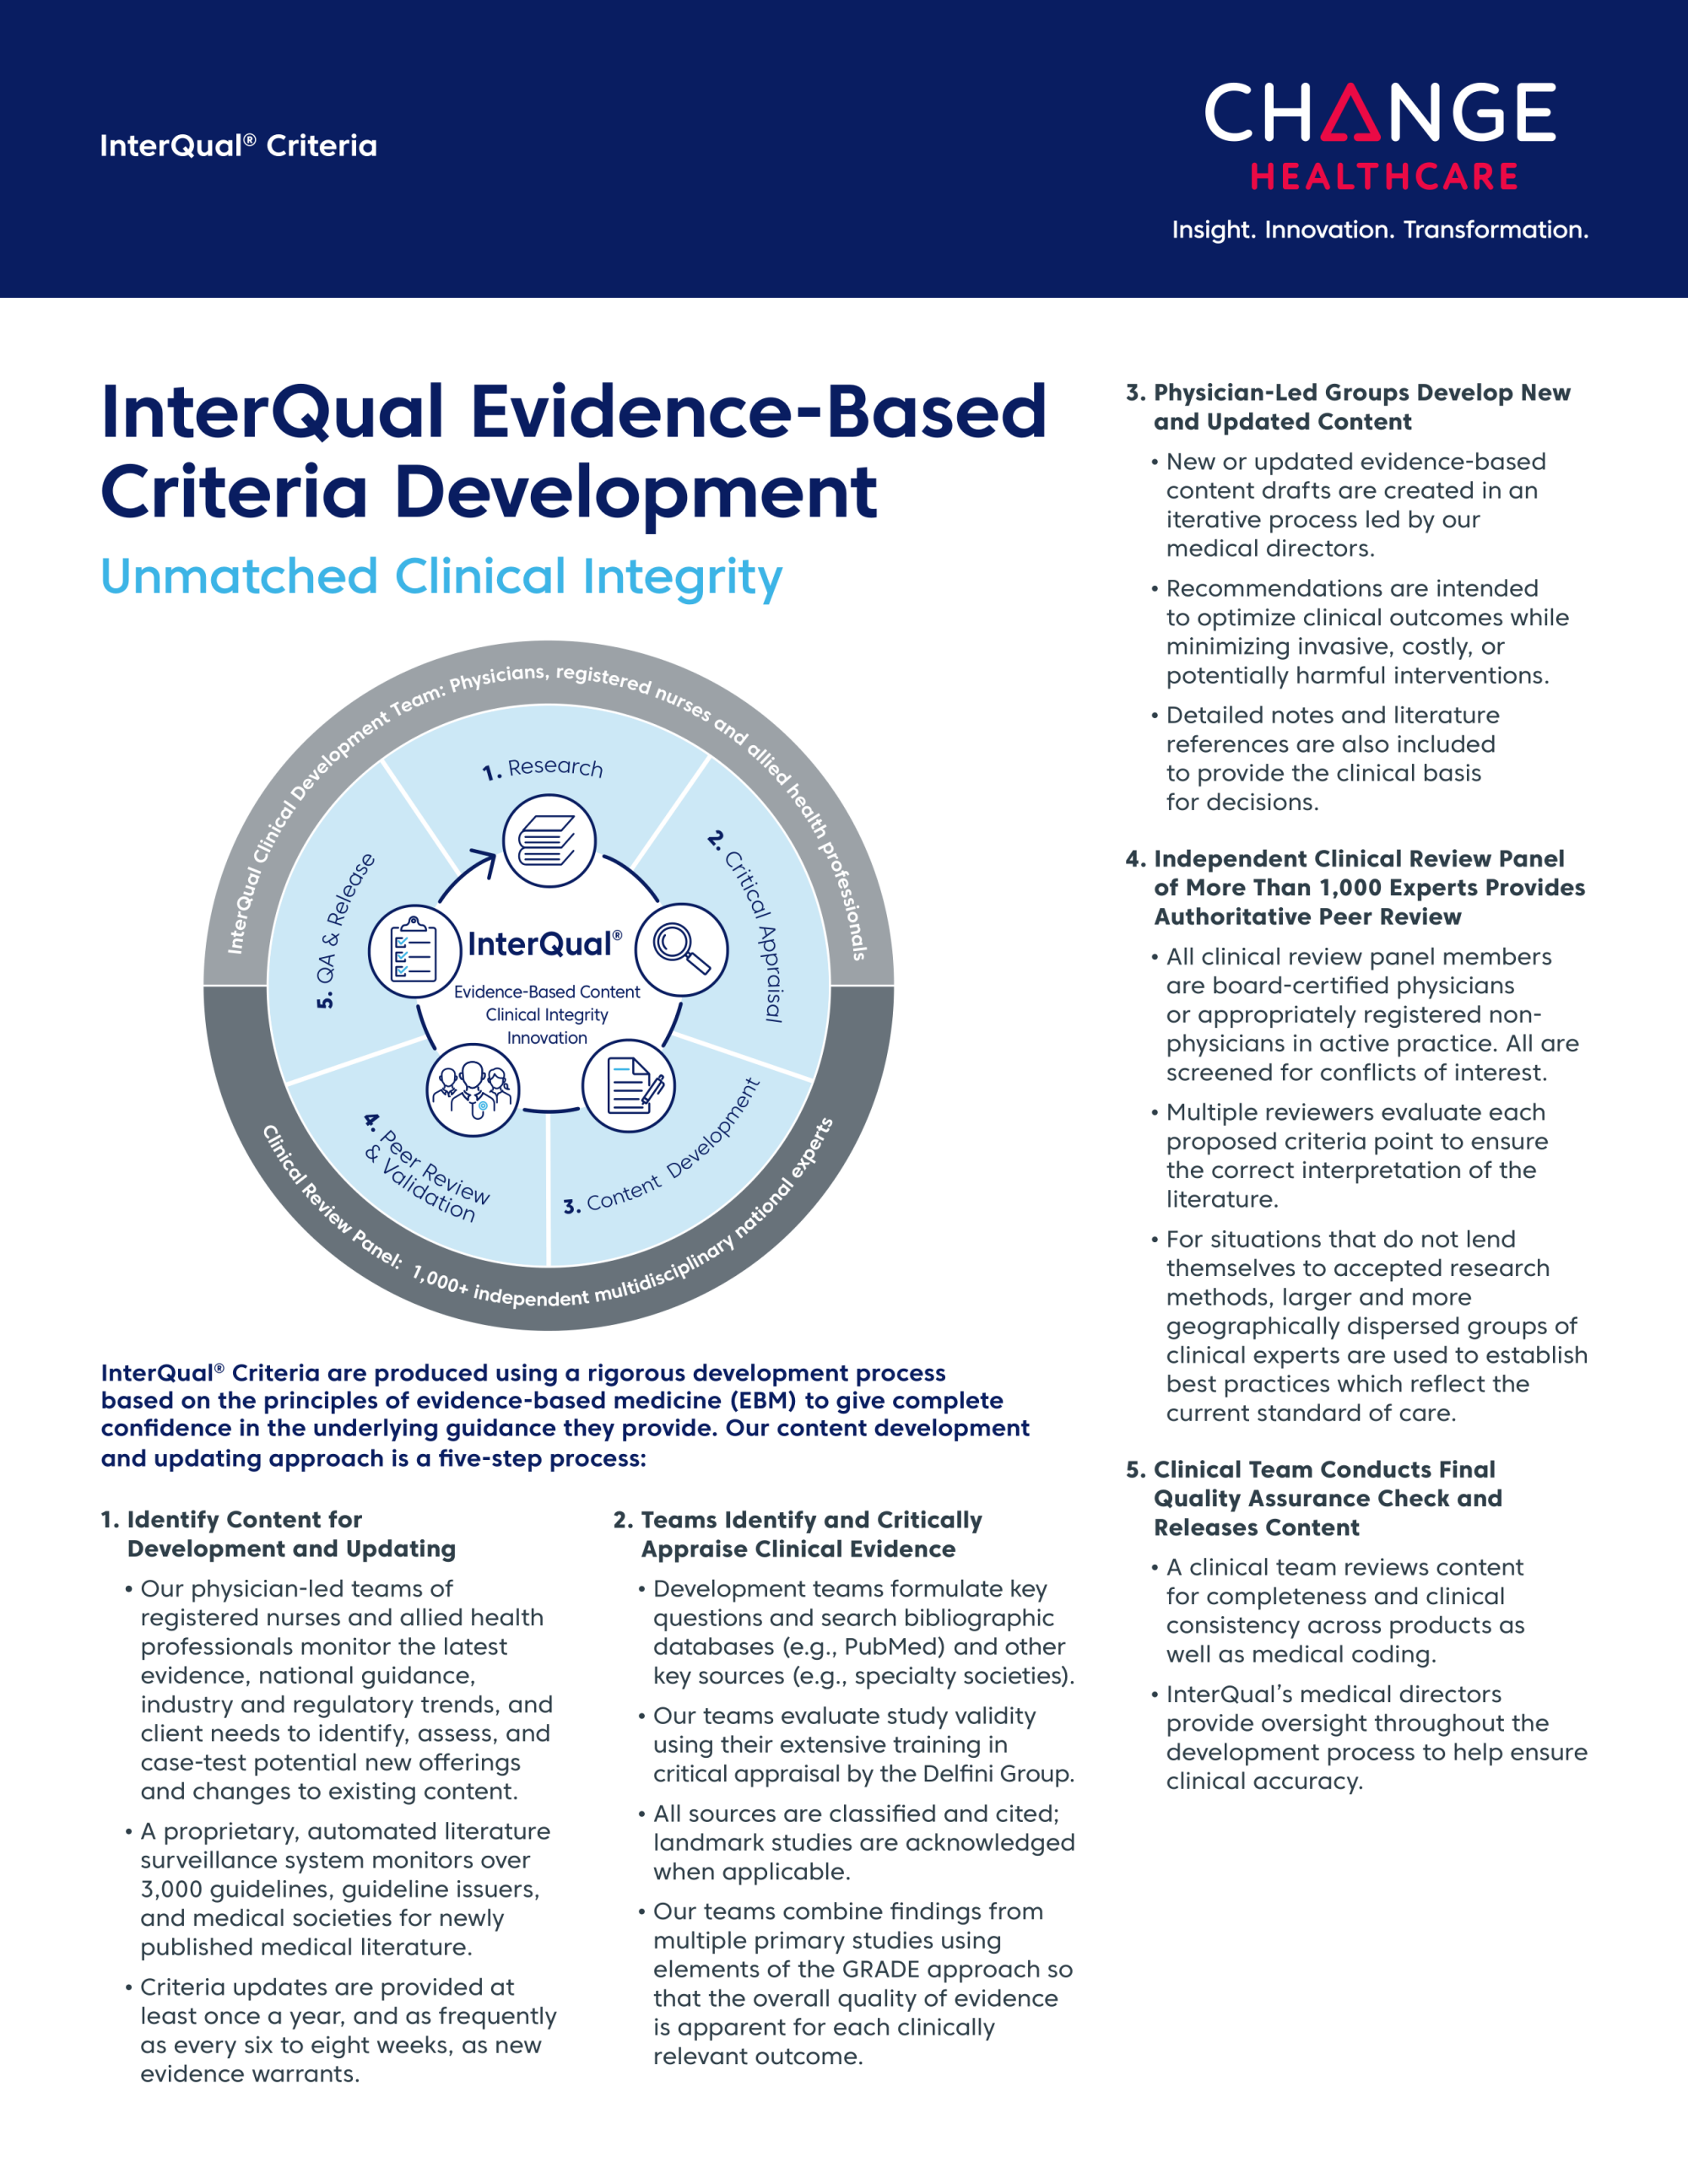 InterQual Evidence Based Criteria Image